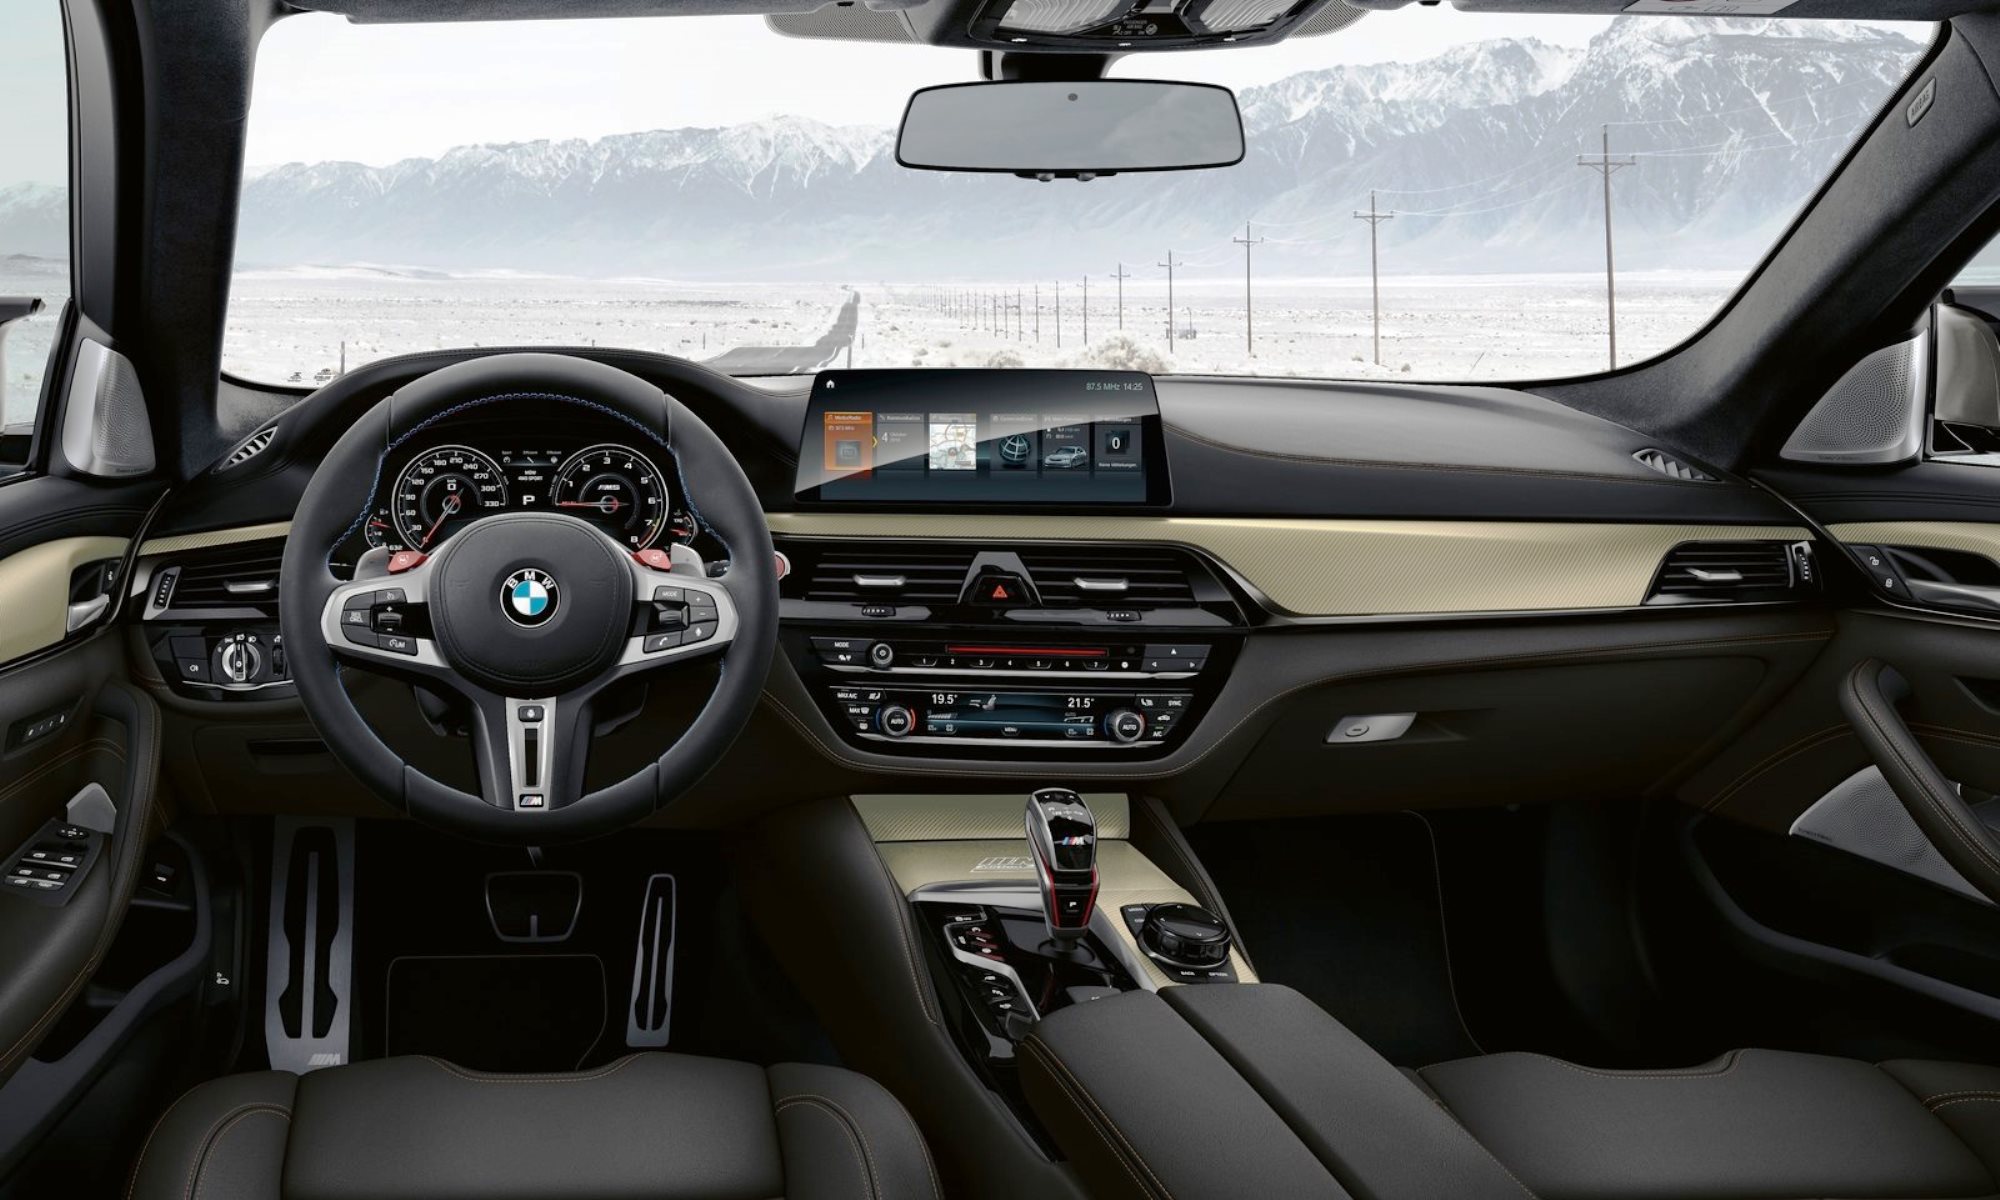 BMW M5 Edition 35 Years interior